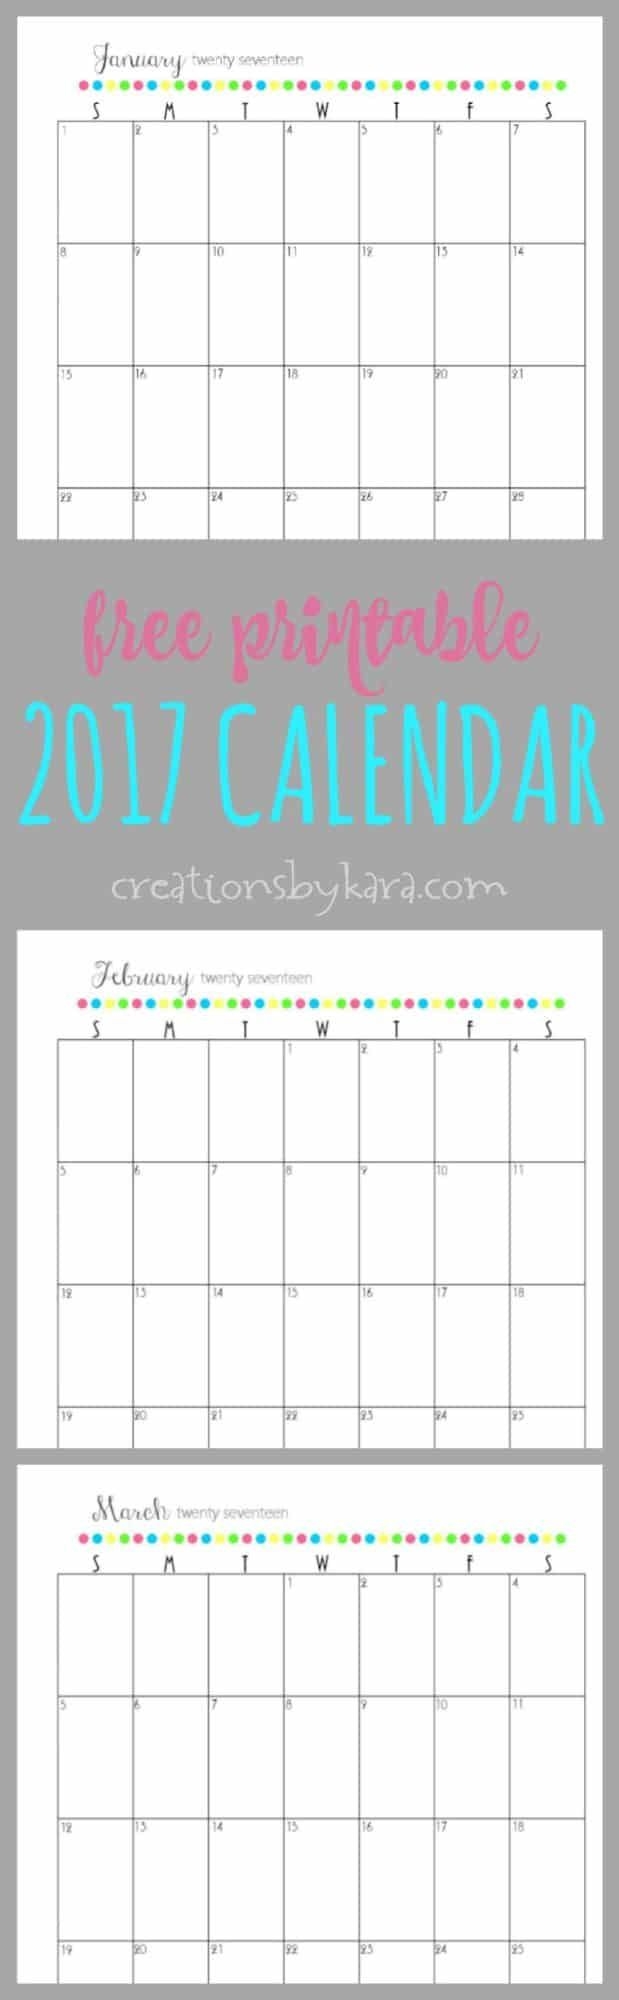 free printable 2017 calendar creationskara